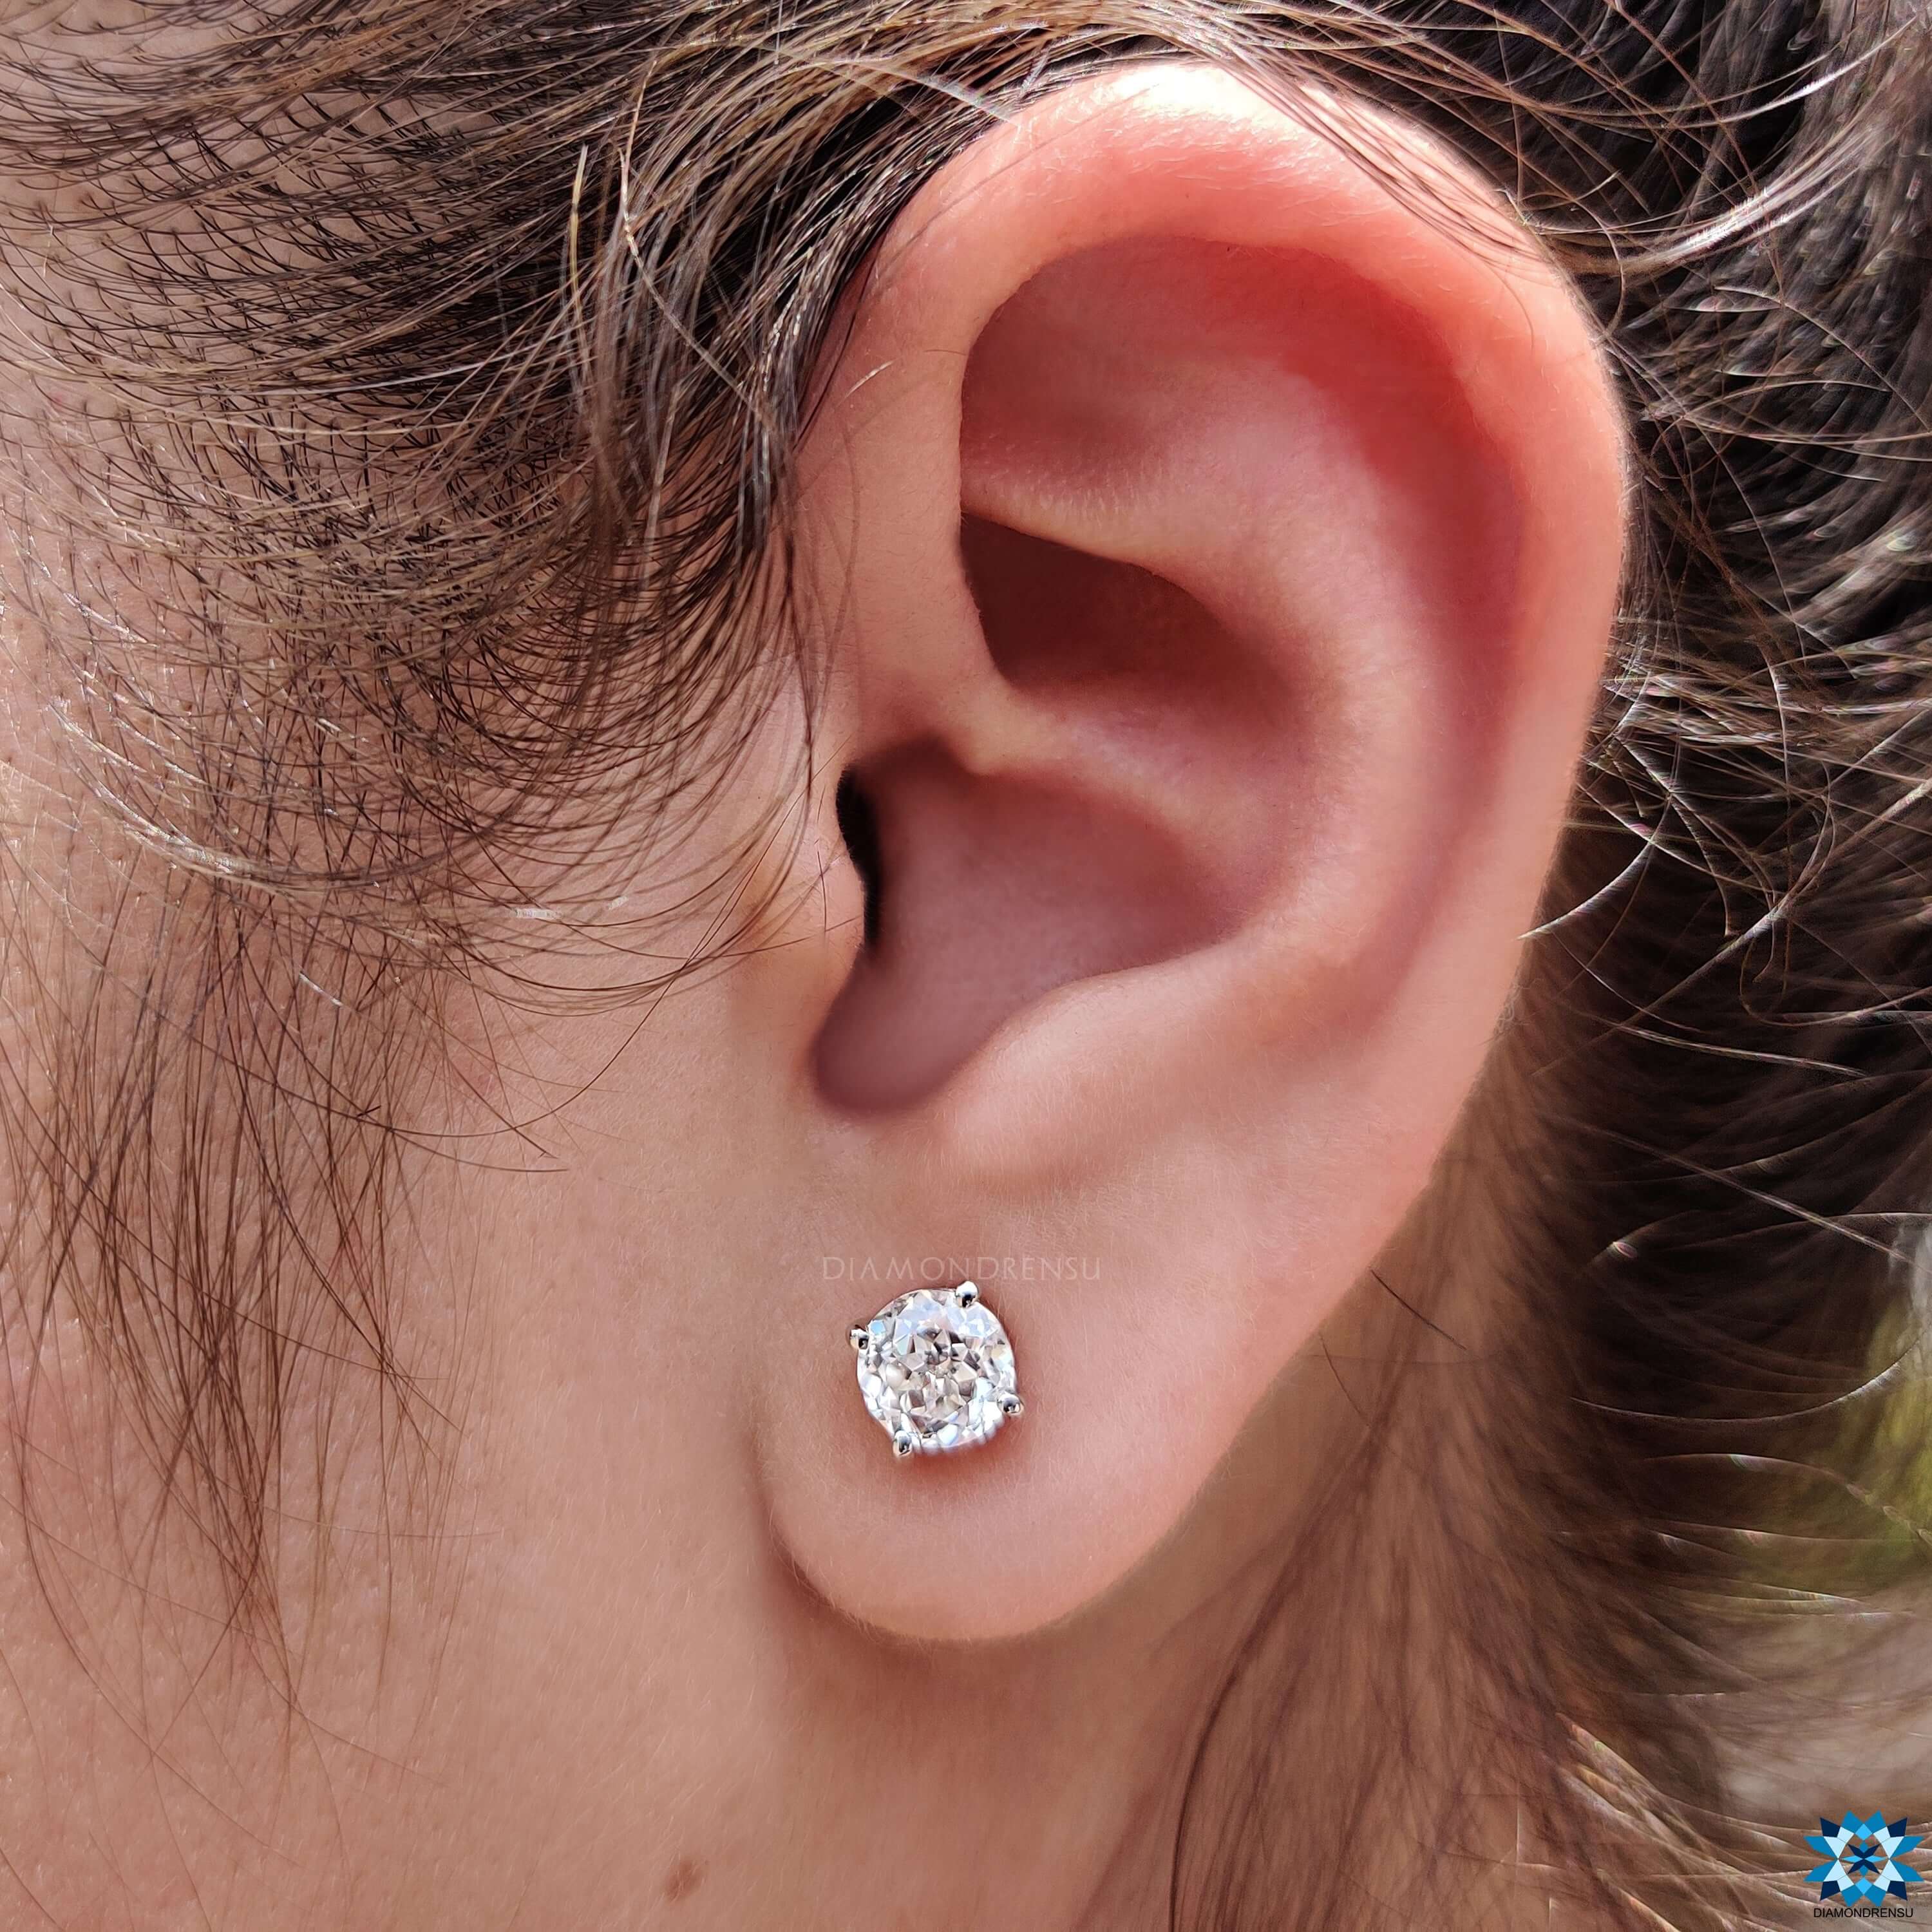 stud earrings - diamondrensu